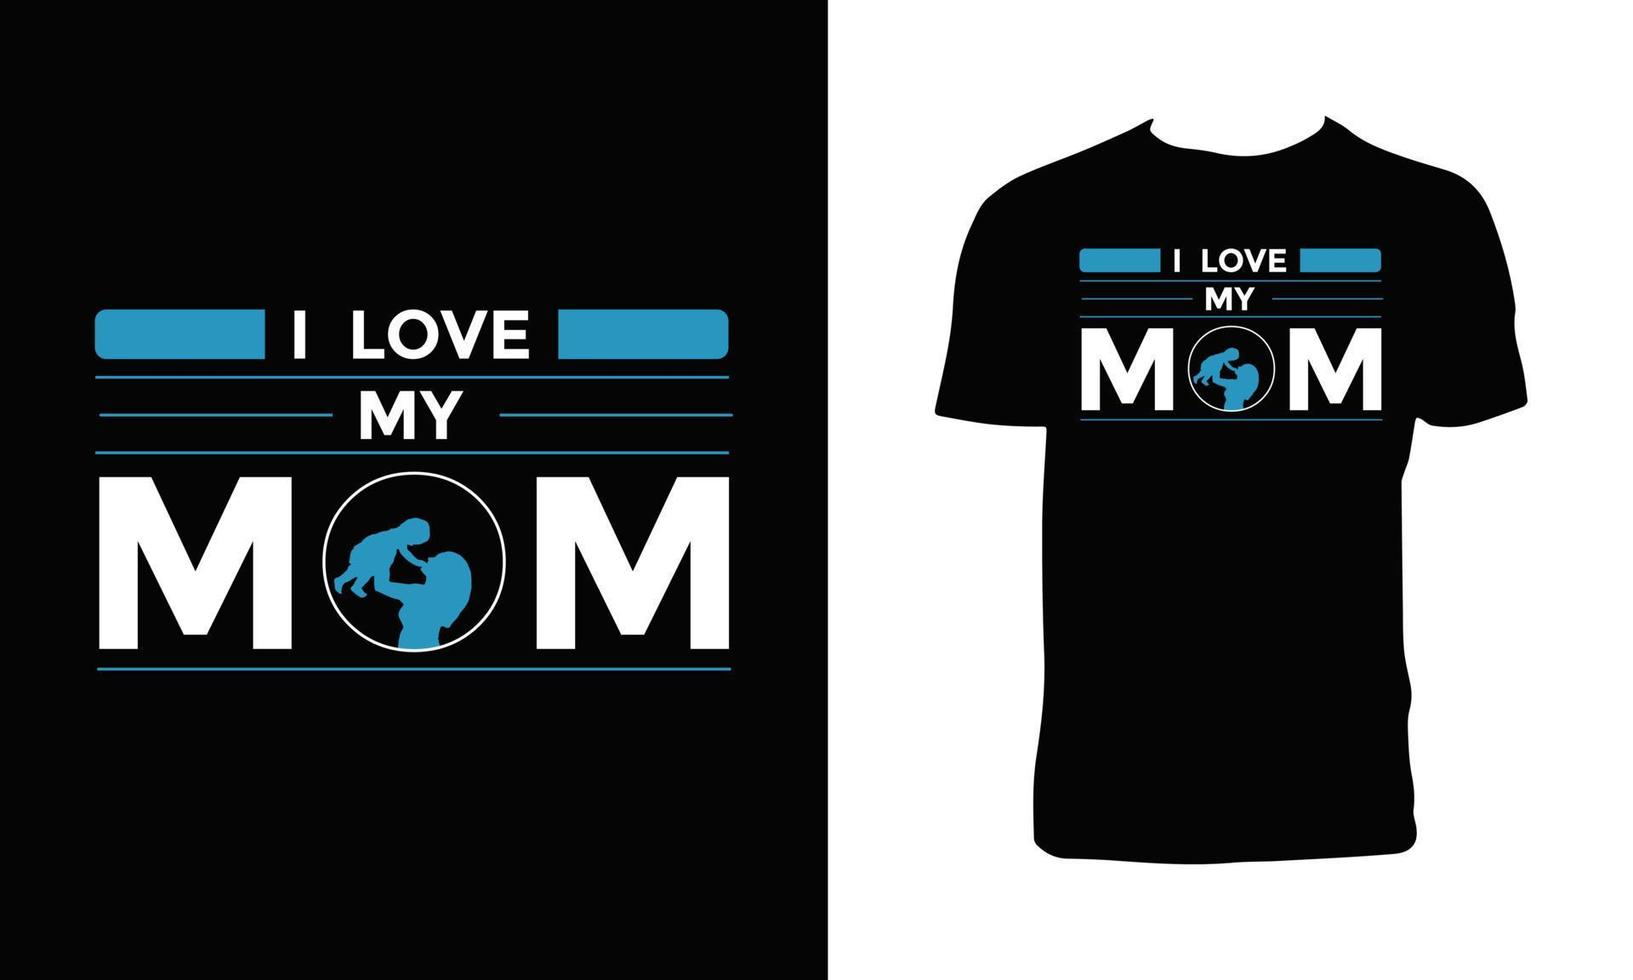 diseño de camiseta de tipografía de mamá. vector